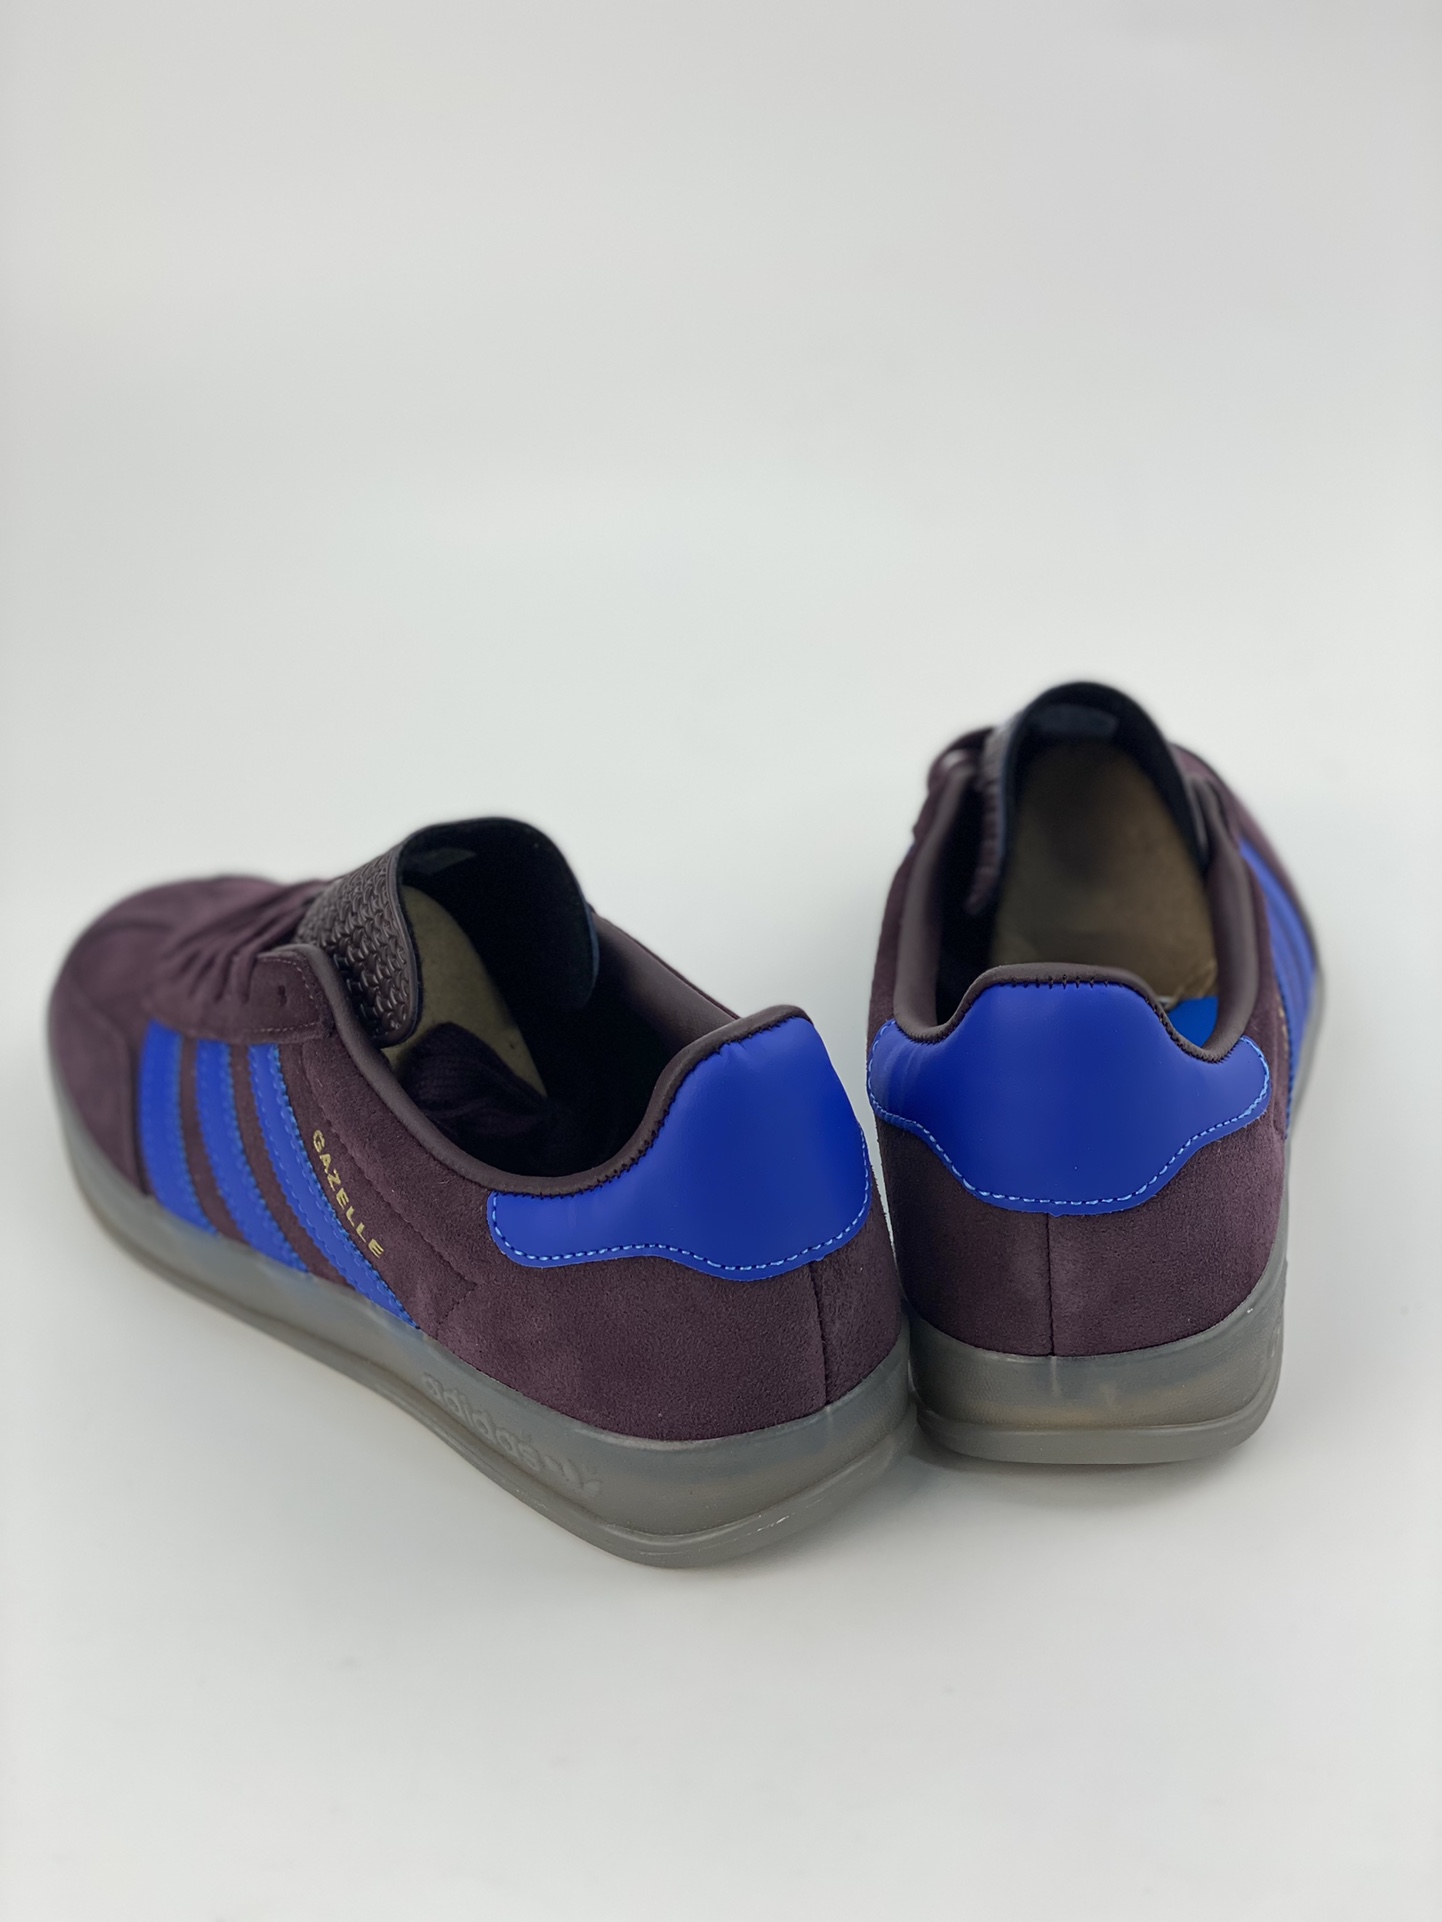 Adidas Originals Gazelle Indoor Clover casual non-slip wear-resistant low-cut sneakers IG9980